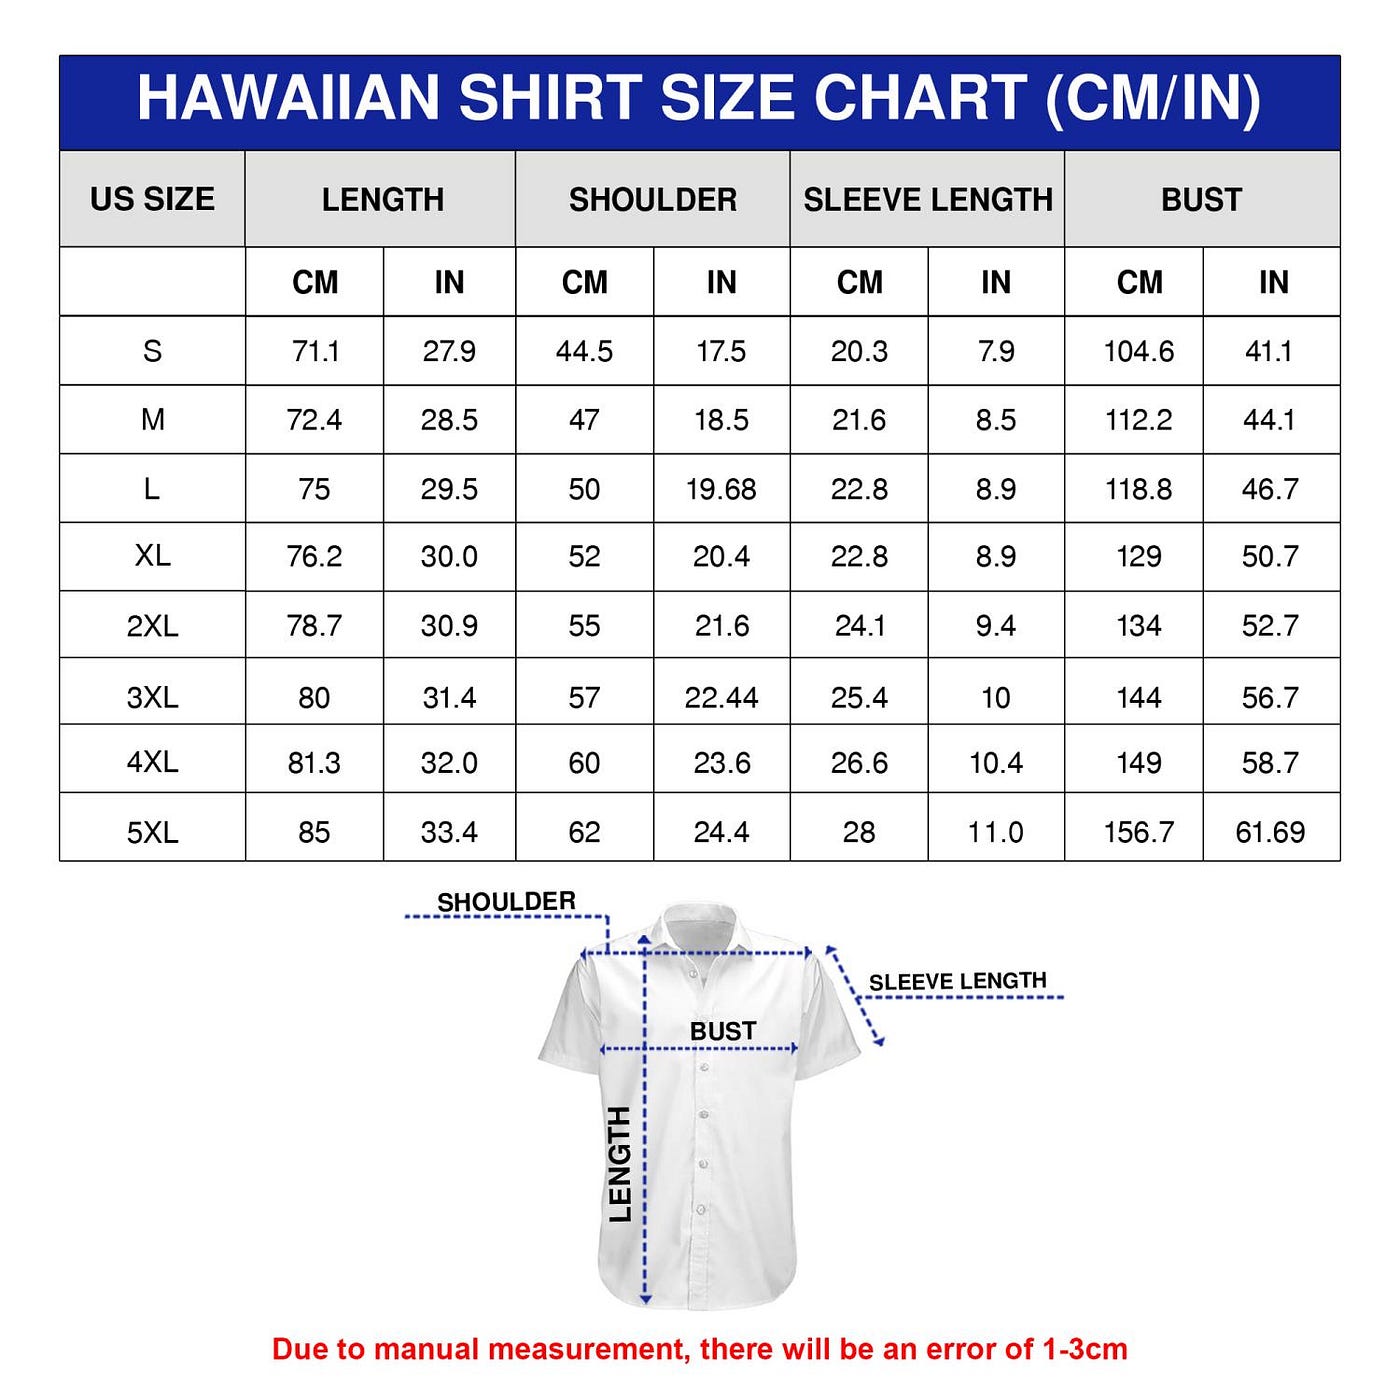 Louis vuitton black hawaii shirt shorts set flip flops luxury lv